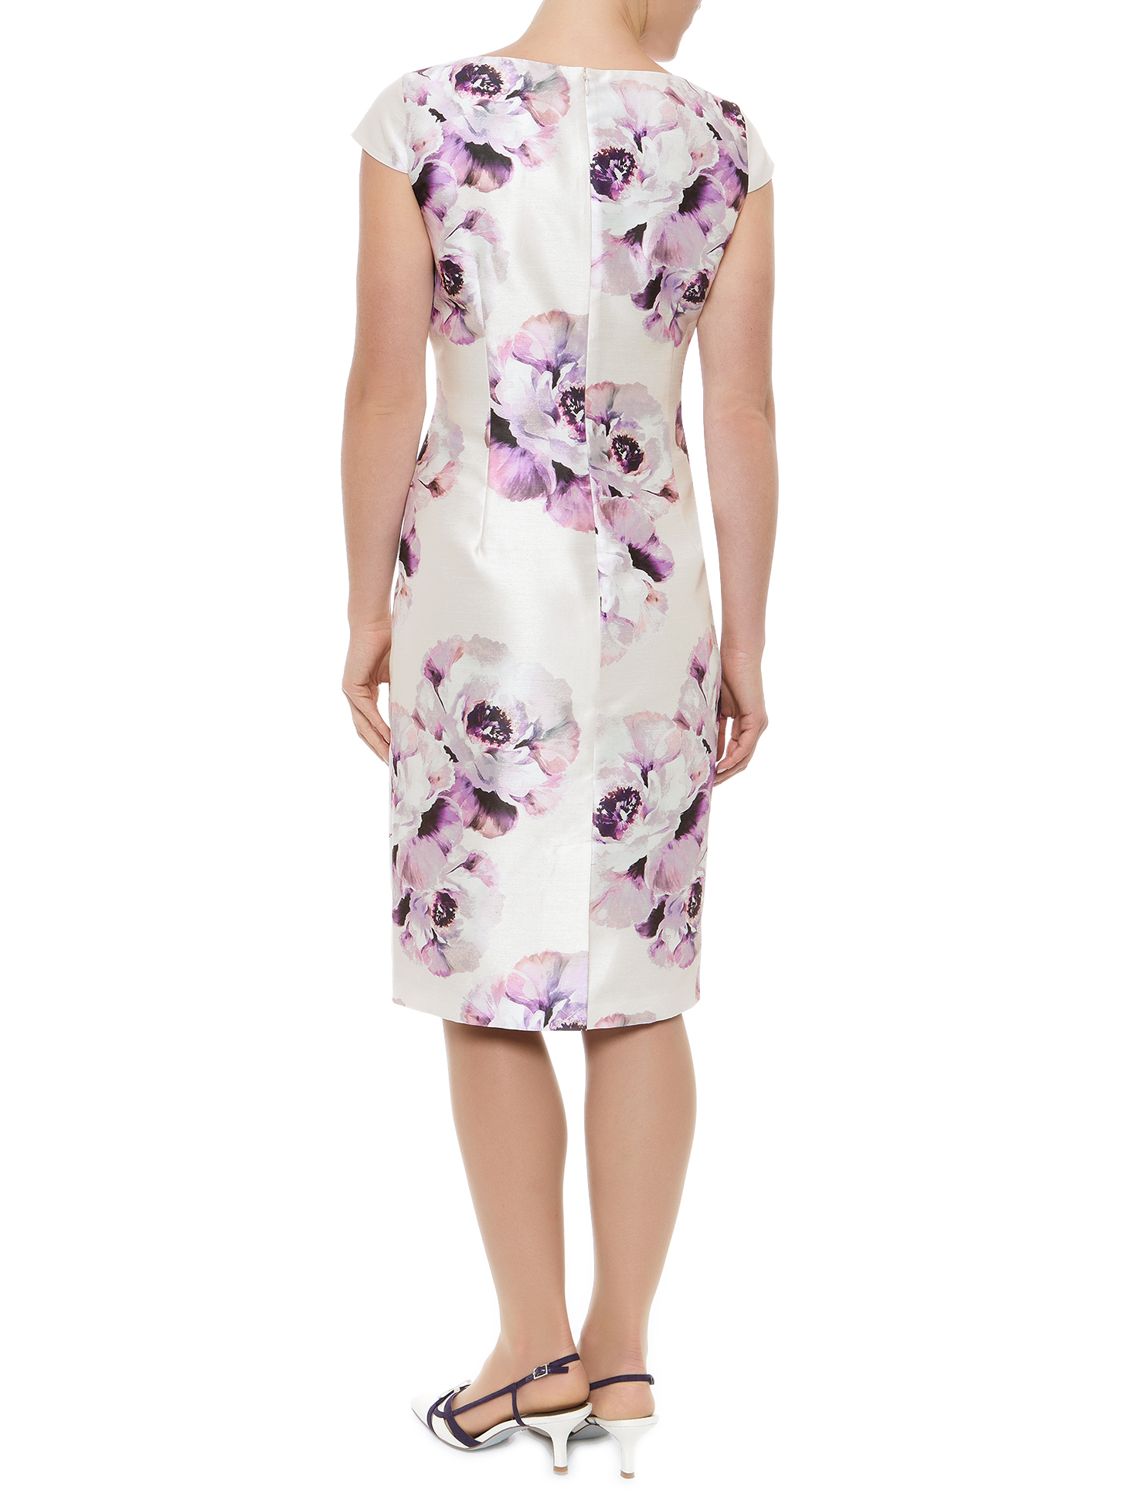 Jacques Vert Print Embellished Dress, Light Pink at John Lewis & Partners